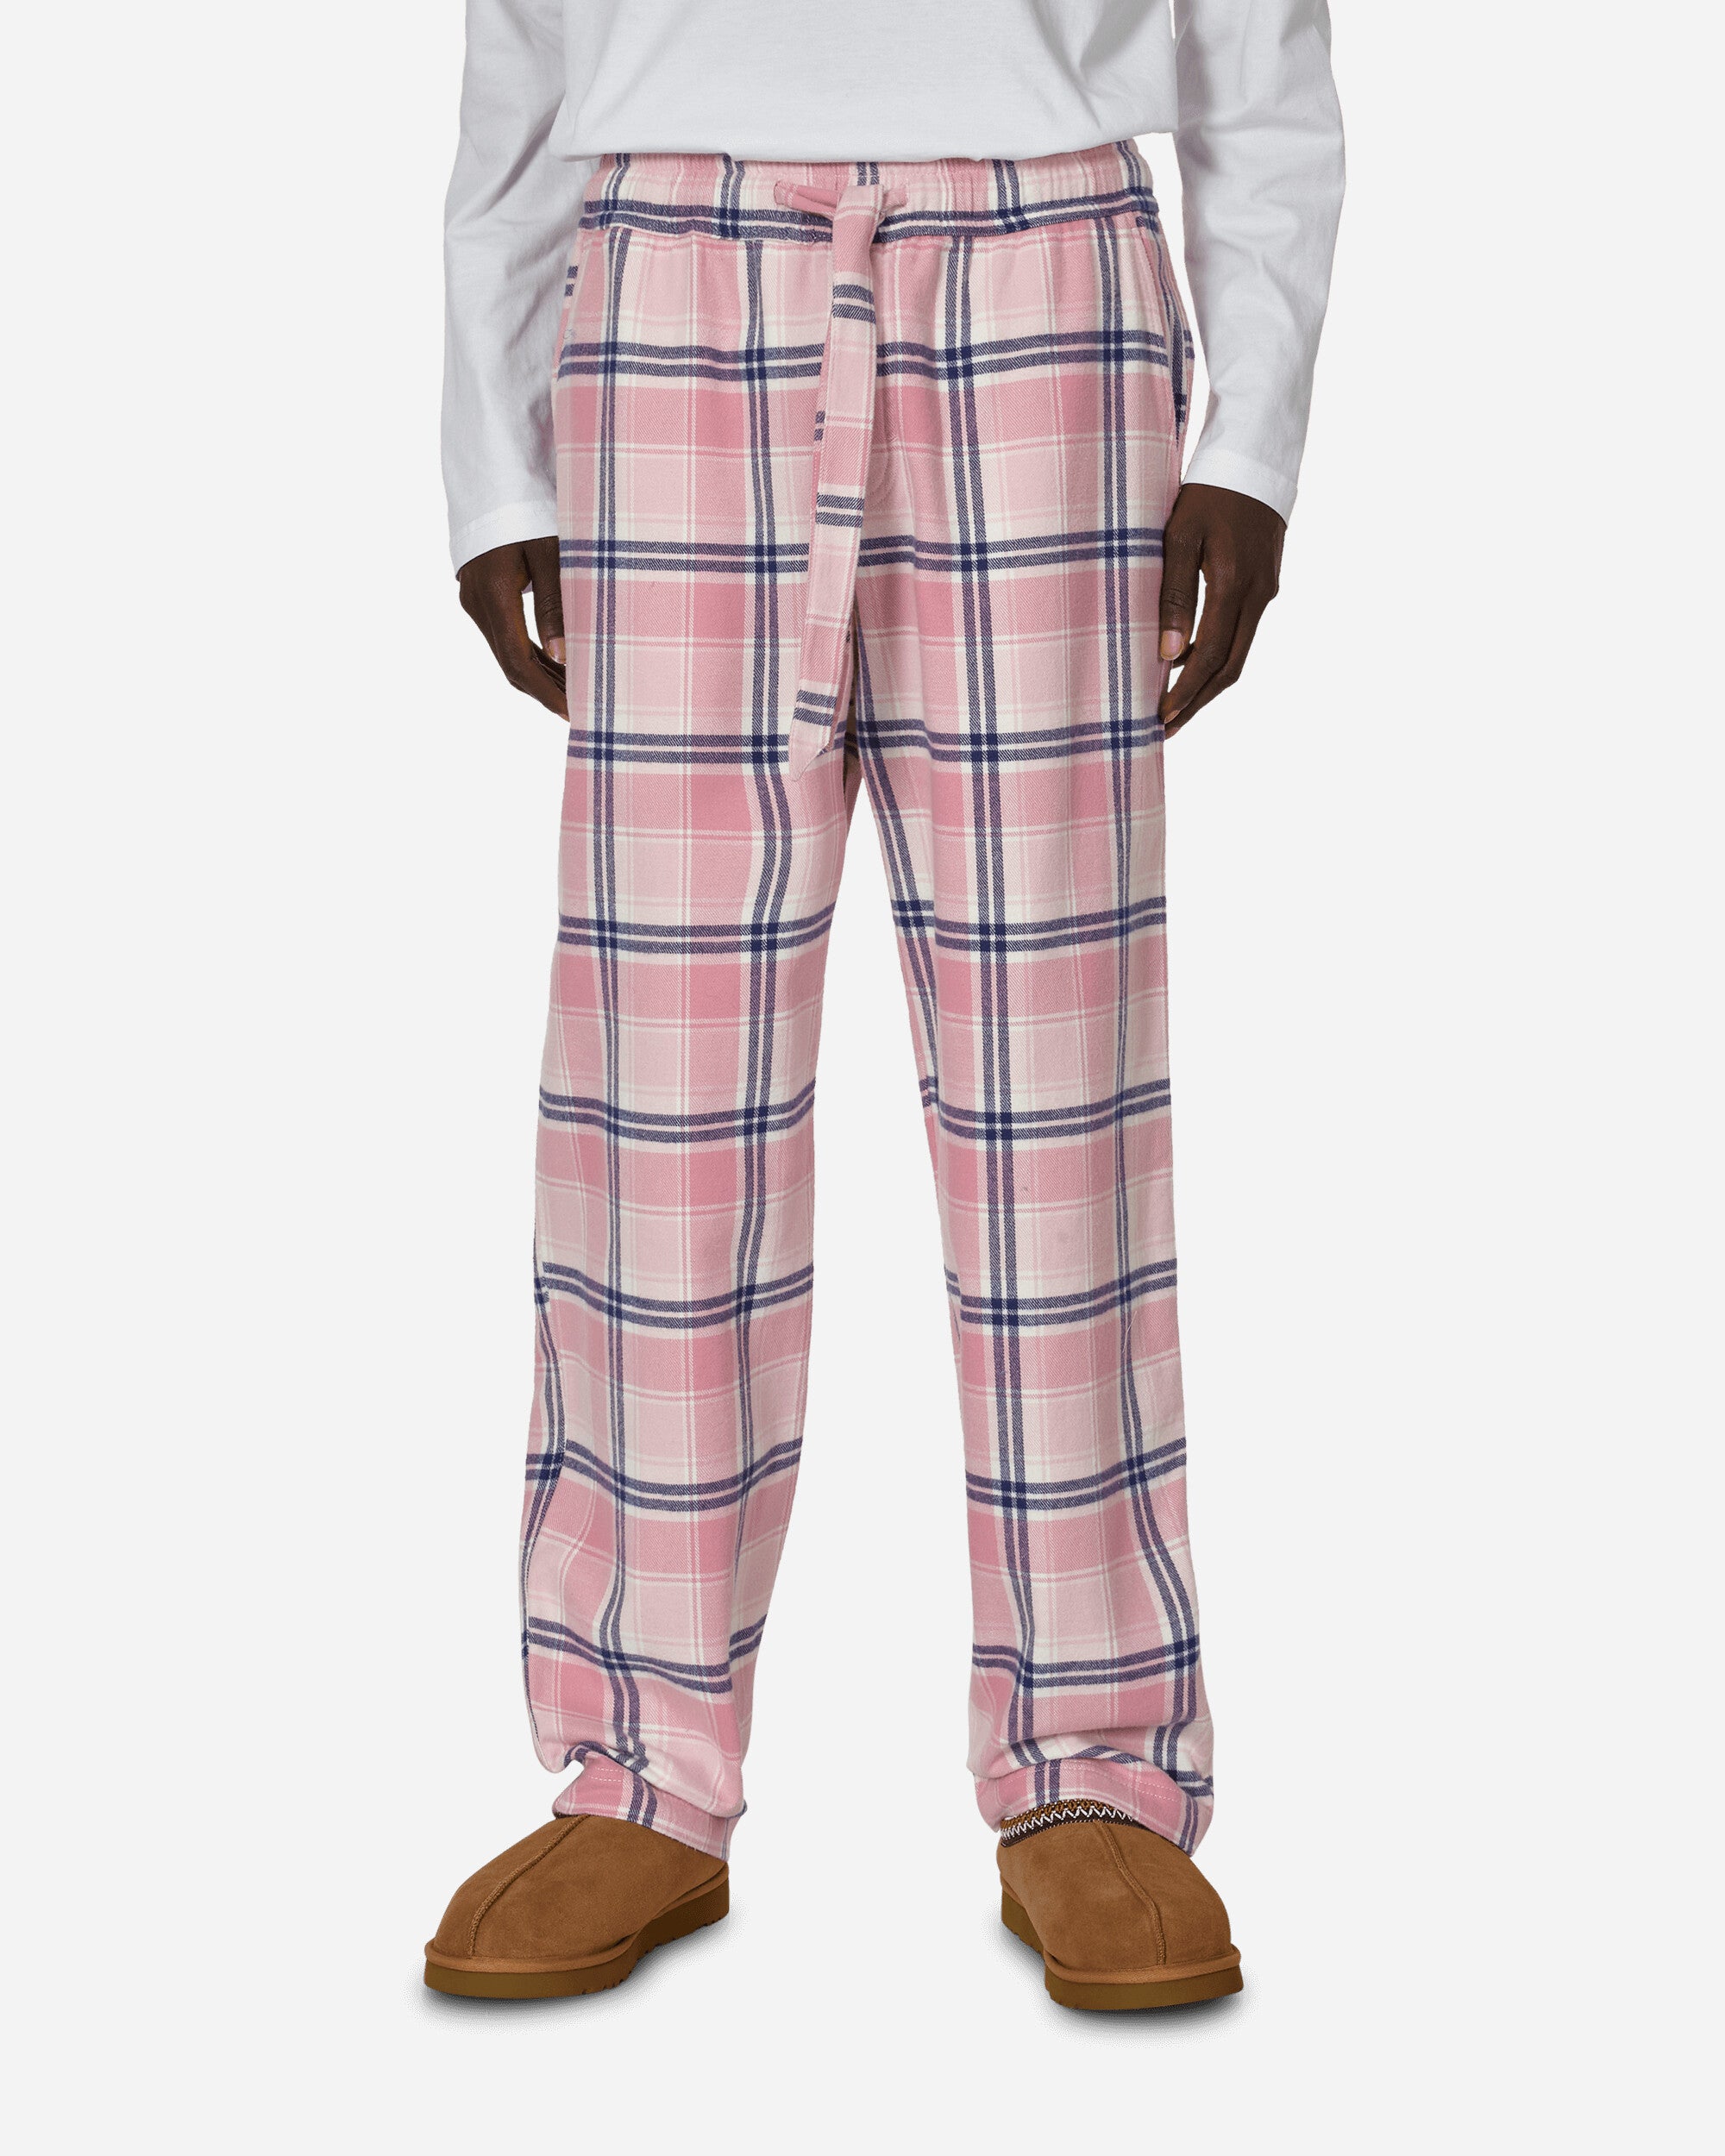 Flannel Plaid Pijamas Pants Pink